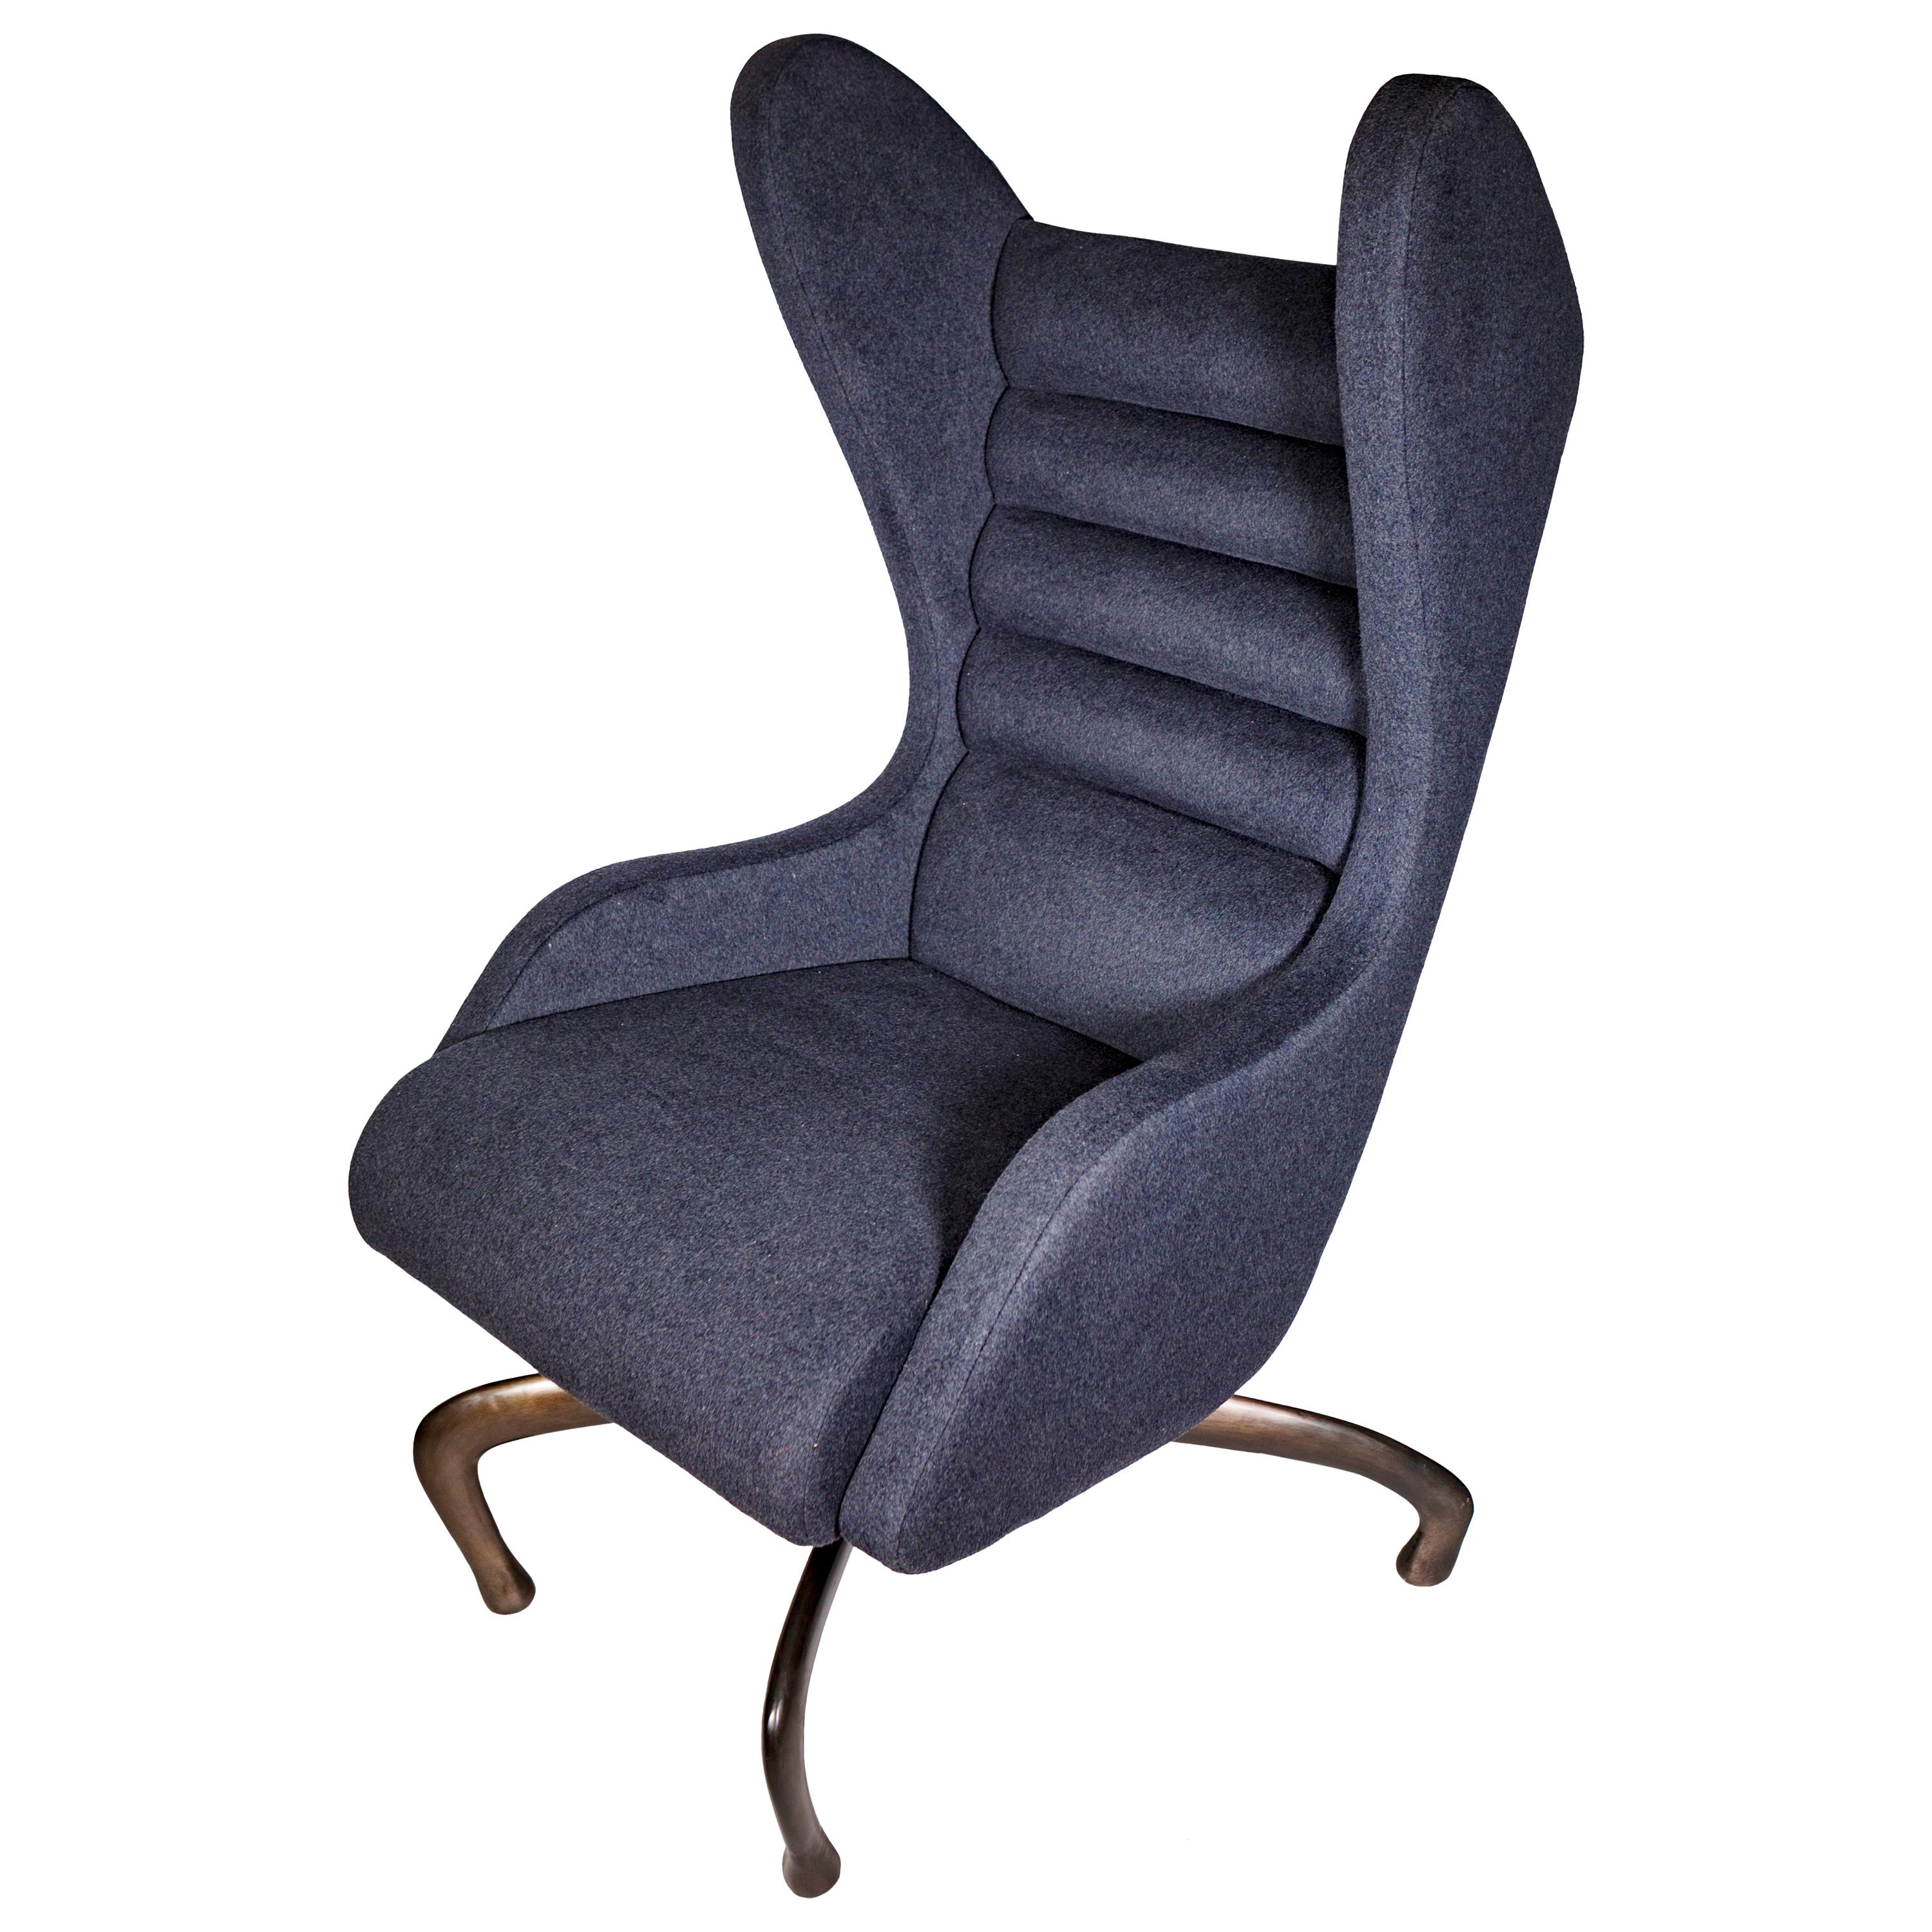 Cantering Lounge Chair, Leather / Cast Aluminium, Jordan Mozer, USA, 2003-2018 For Sale 1